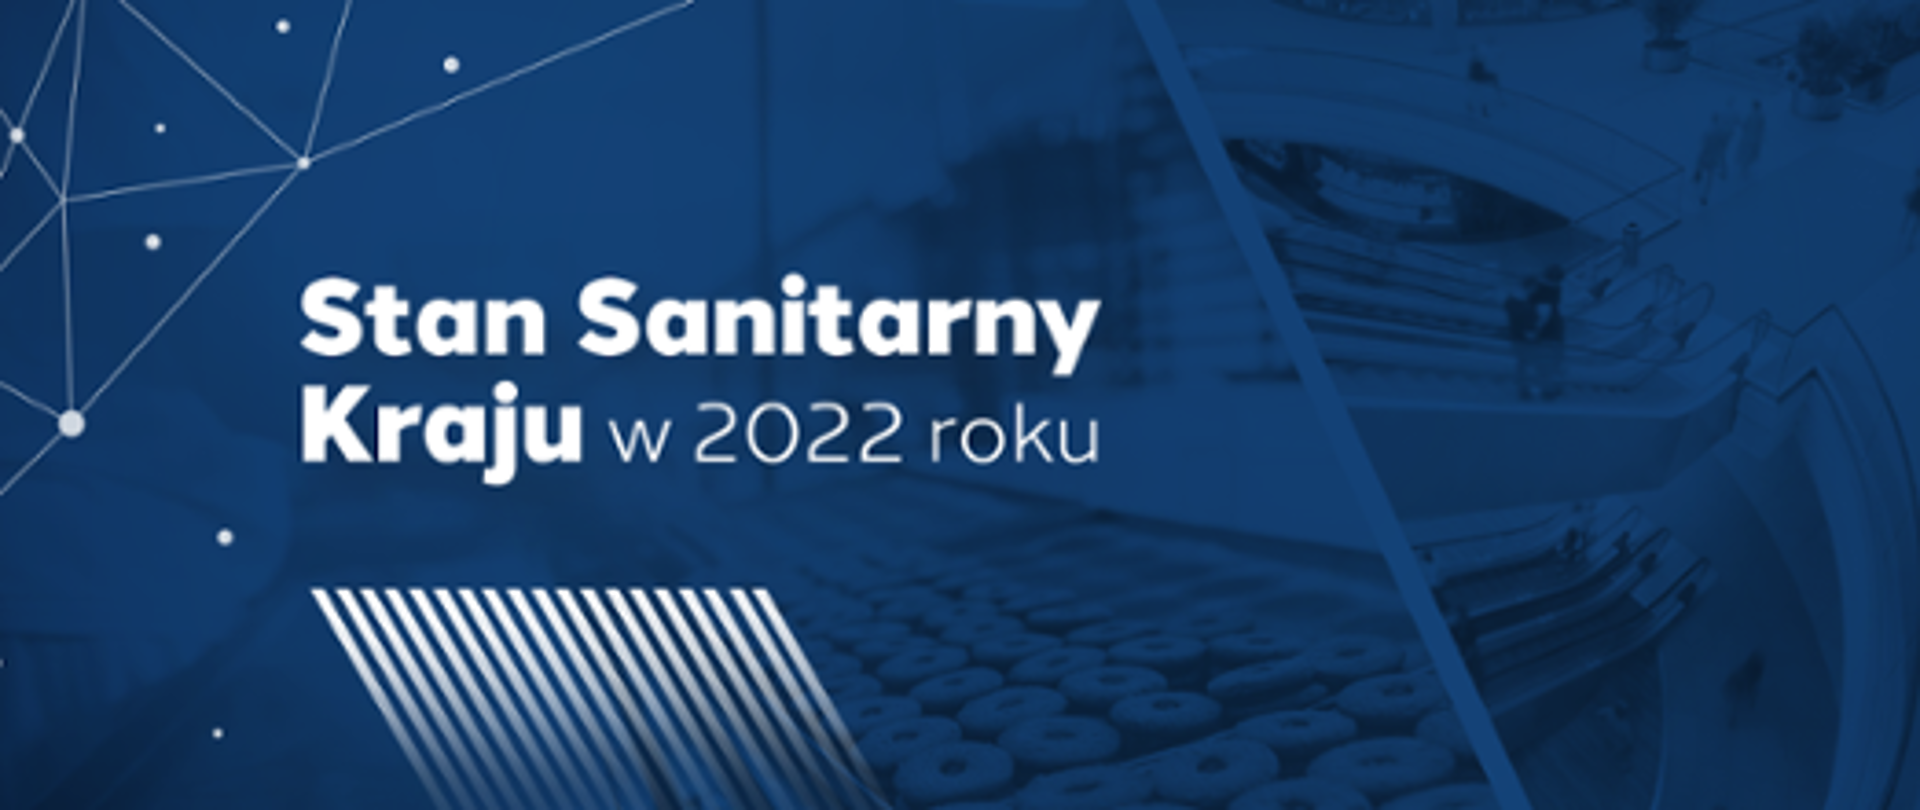 Baner, napis Stan Sanitarny Kraju w 2022 roku